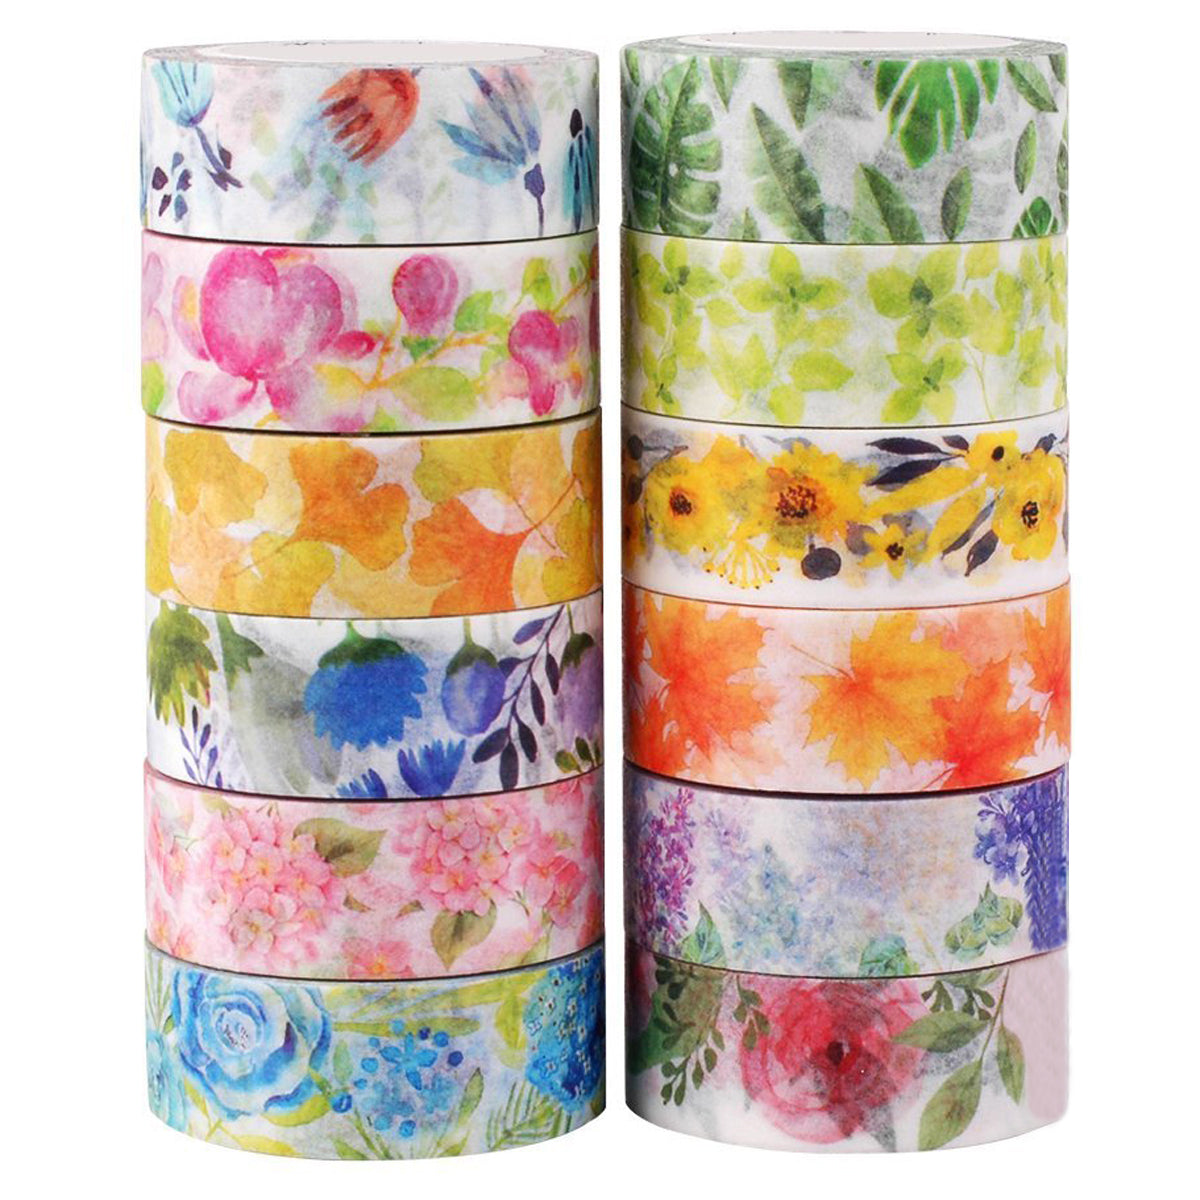 Knaid Floral Washi Tape Set, Assorted 12 Rolls of Spring Flower Decora